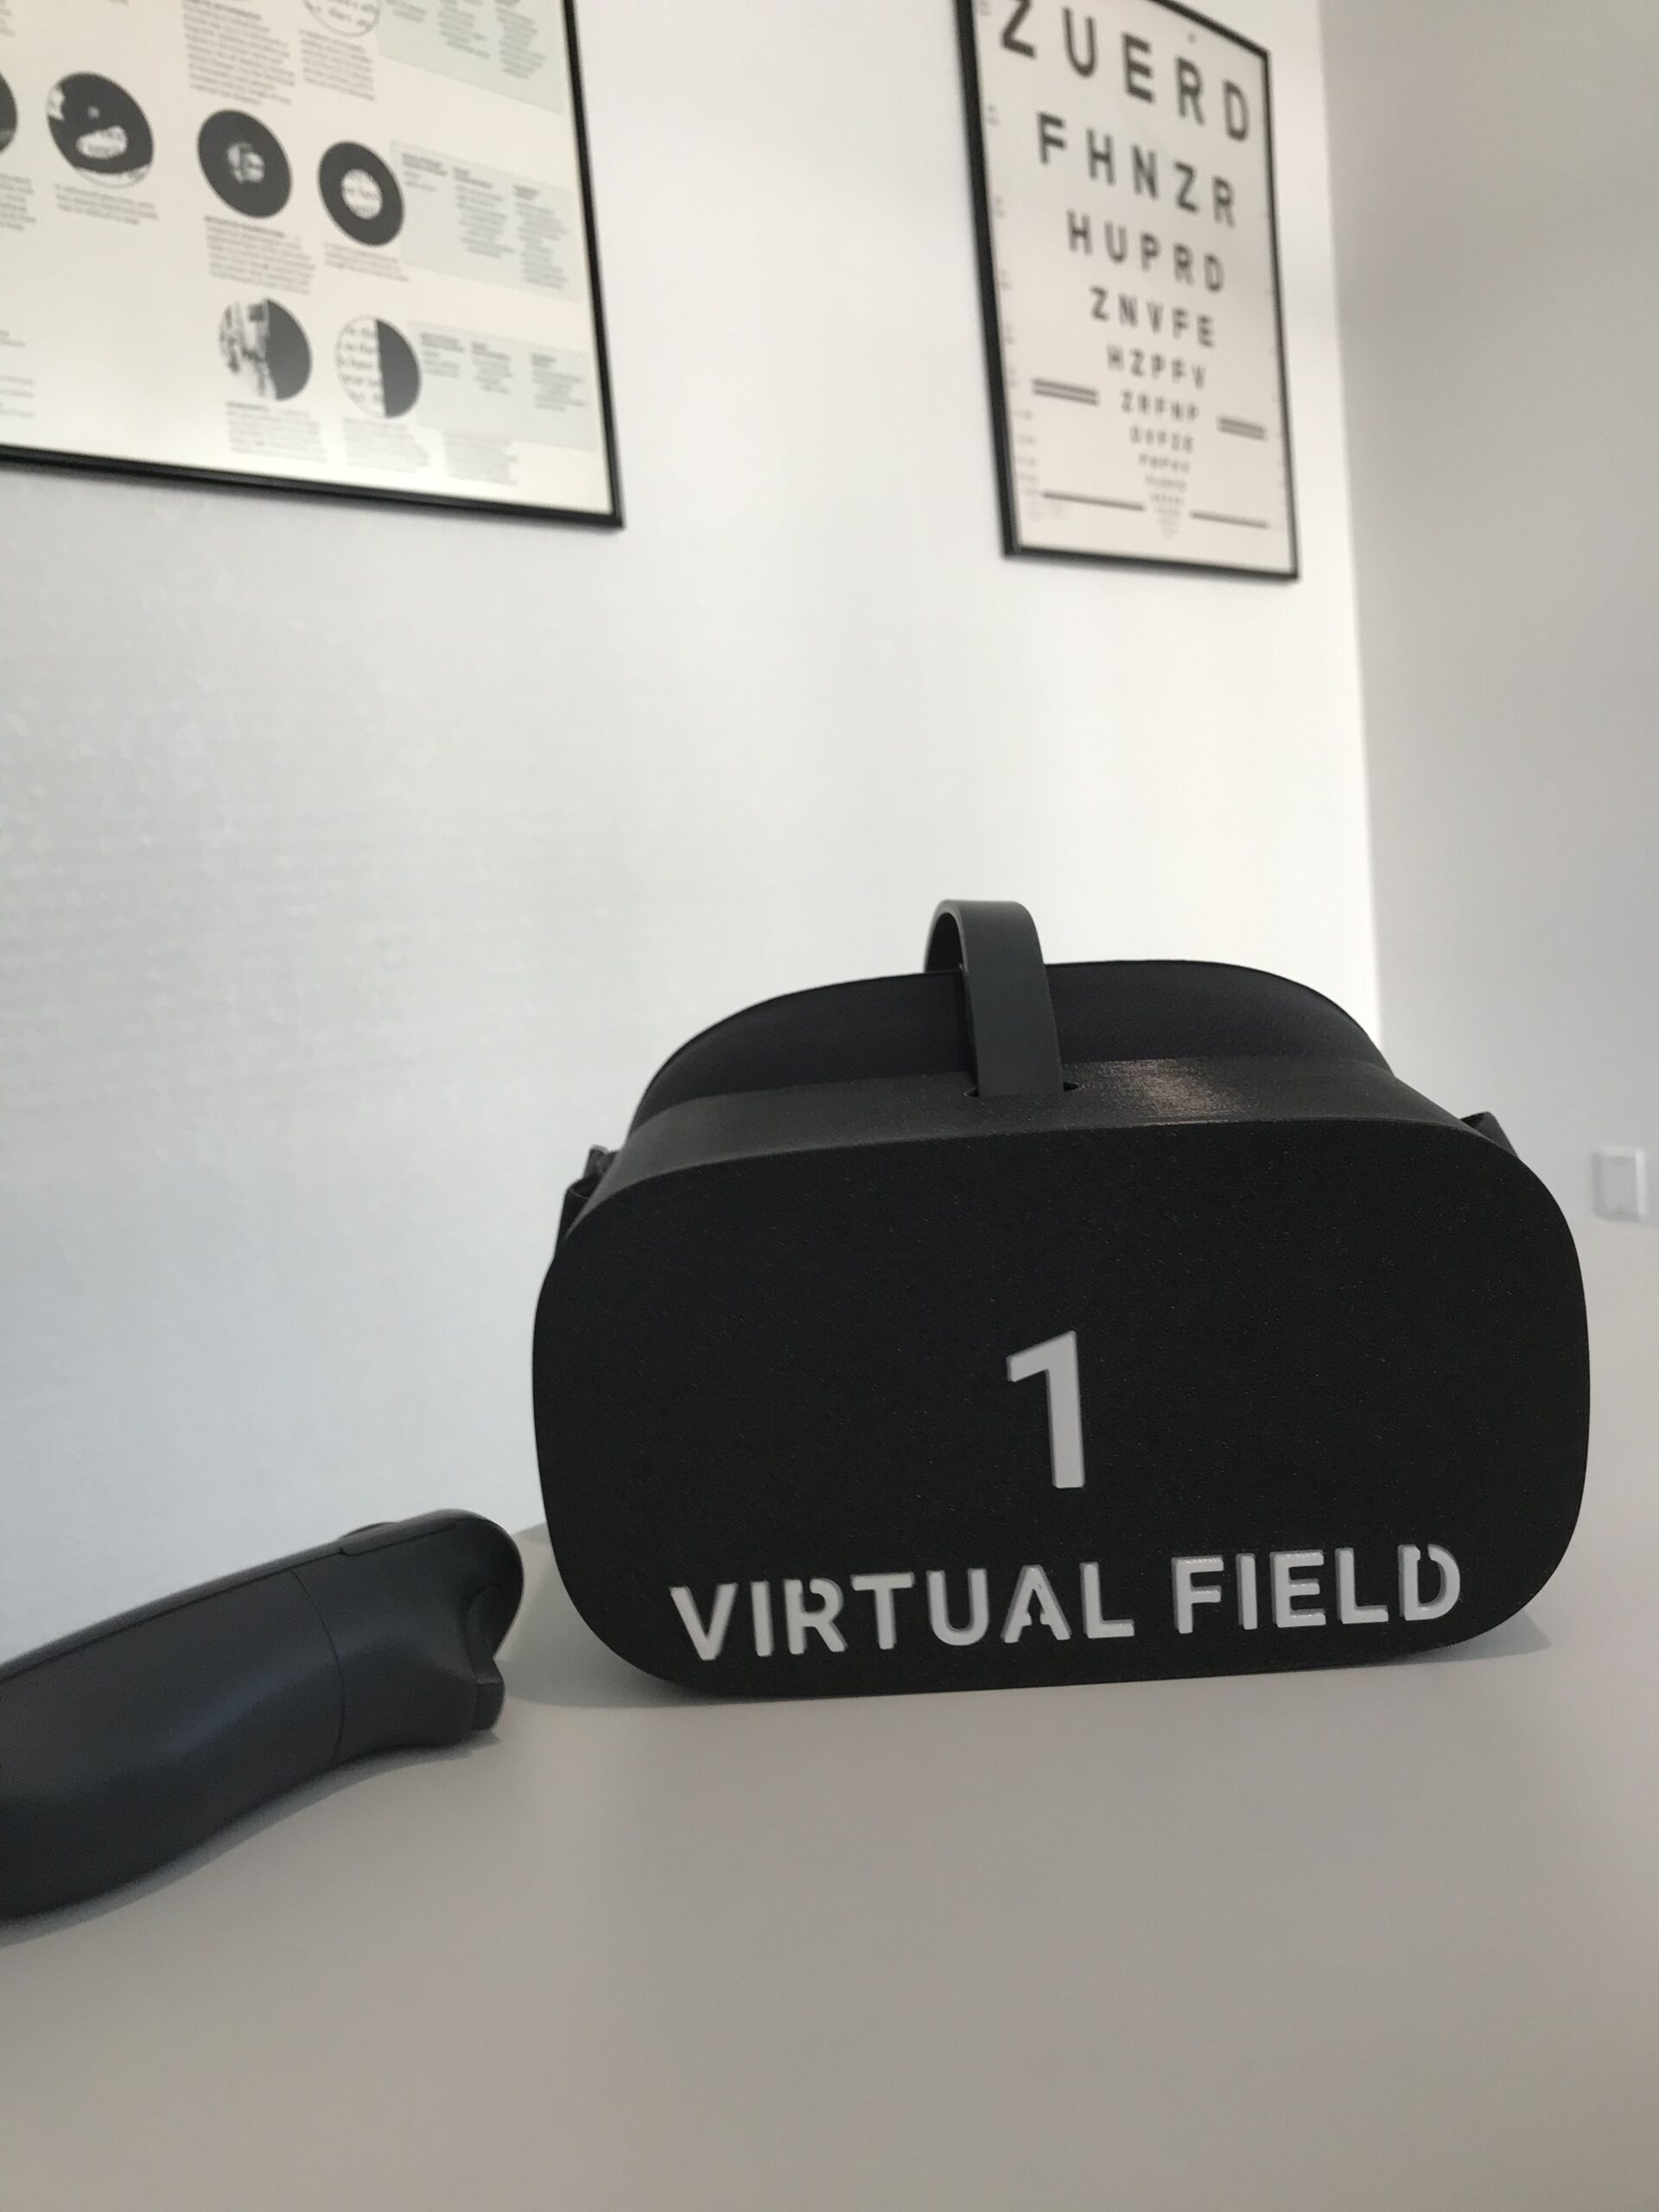 virtual field